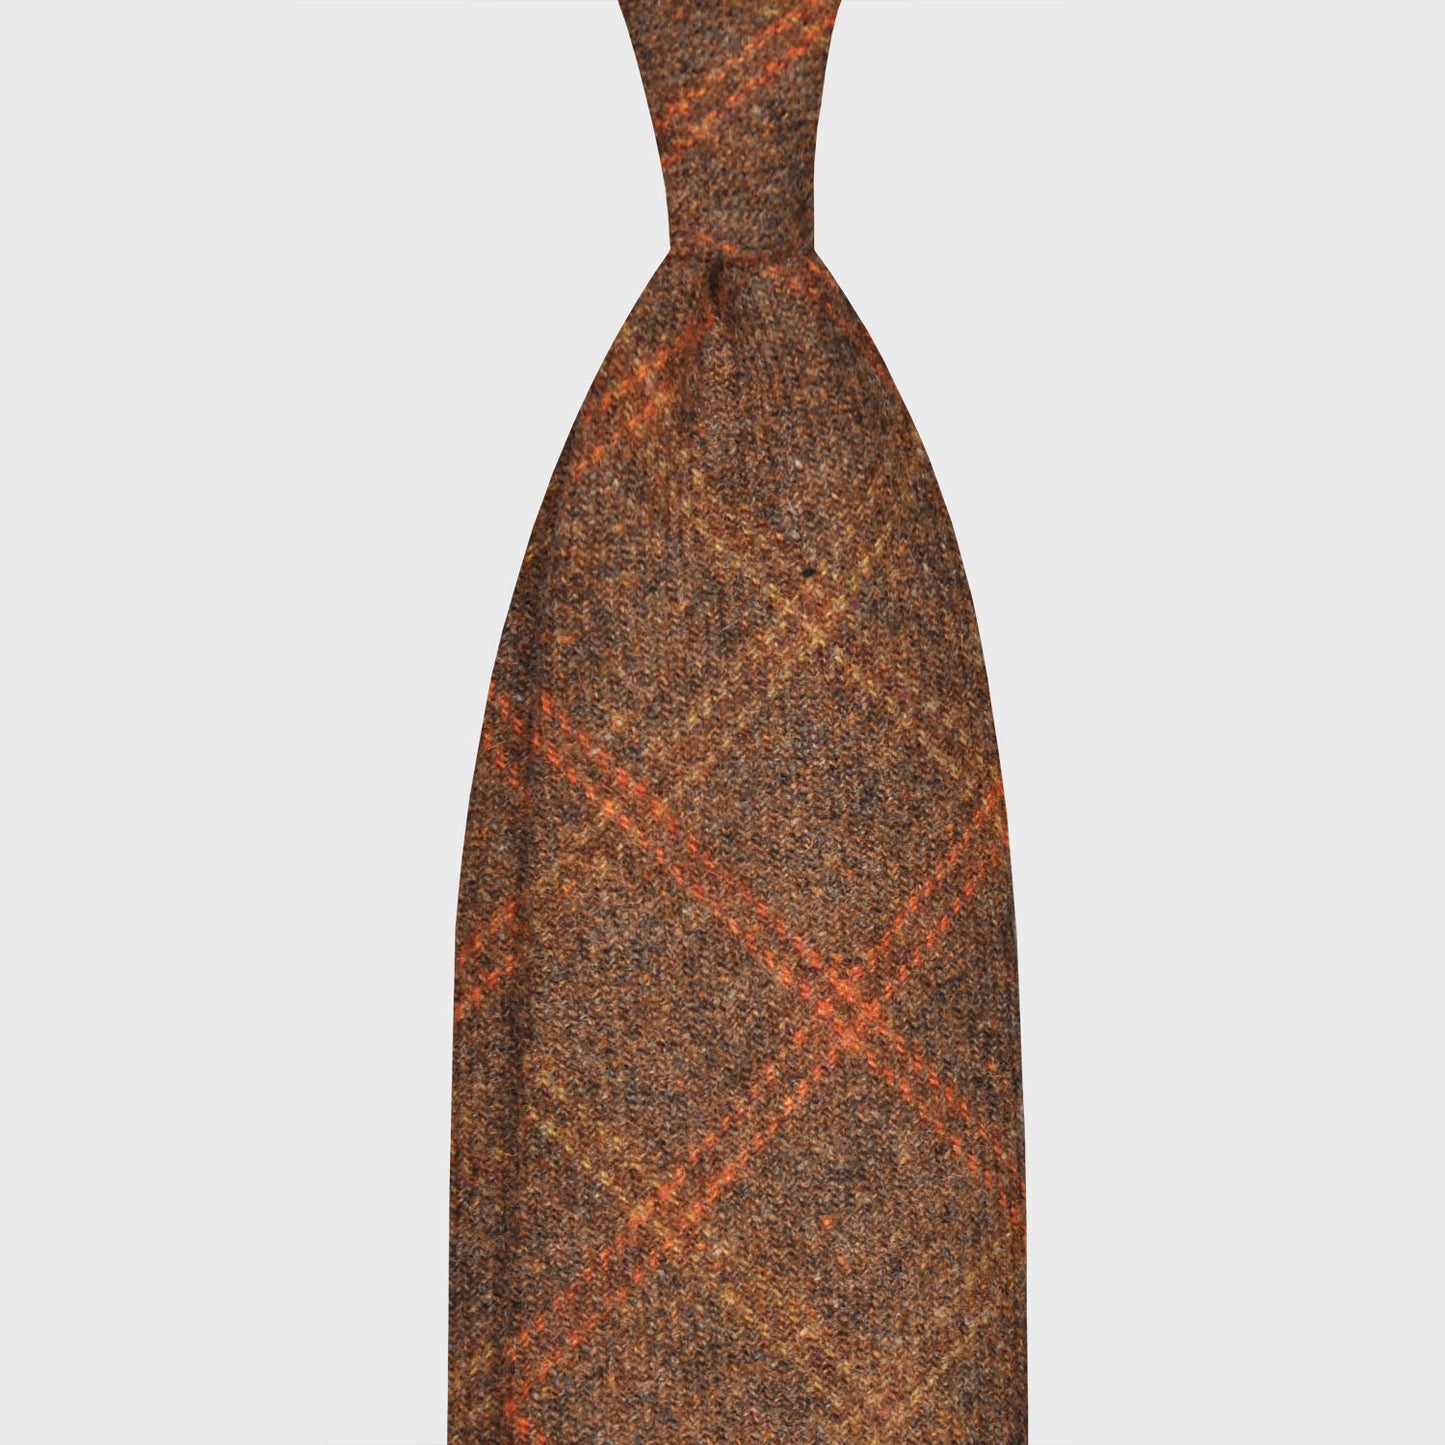 F.Marino Tweed Tie 3 Folds Windowpane Coffee Brown-Wools Boutique Uomo